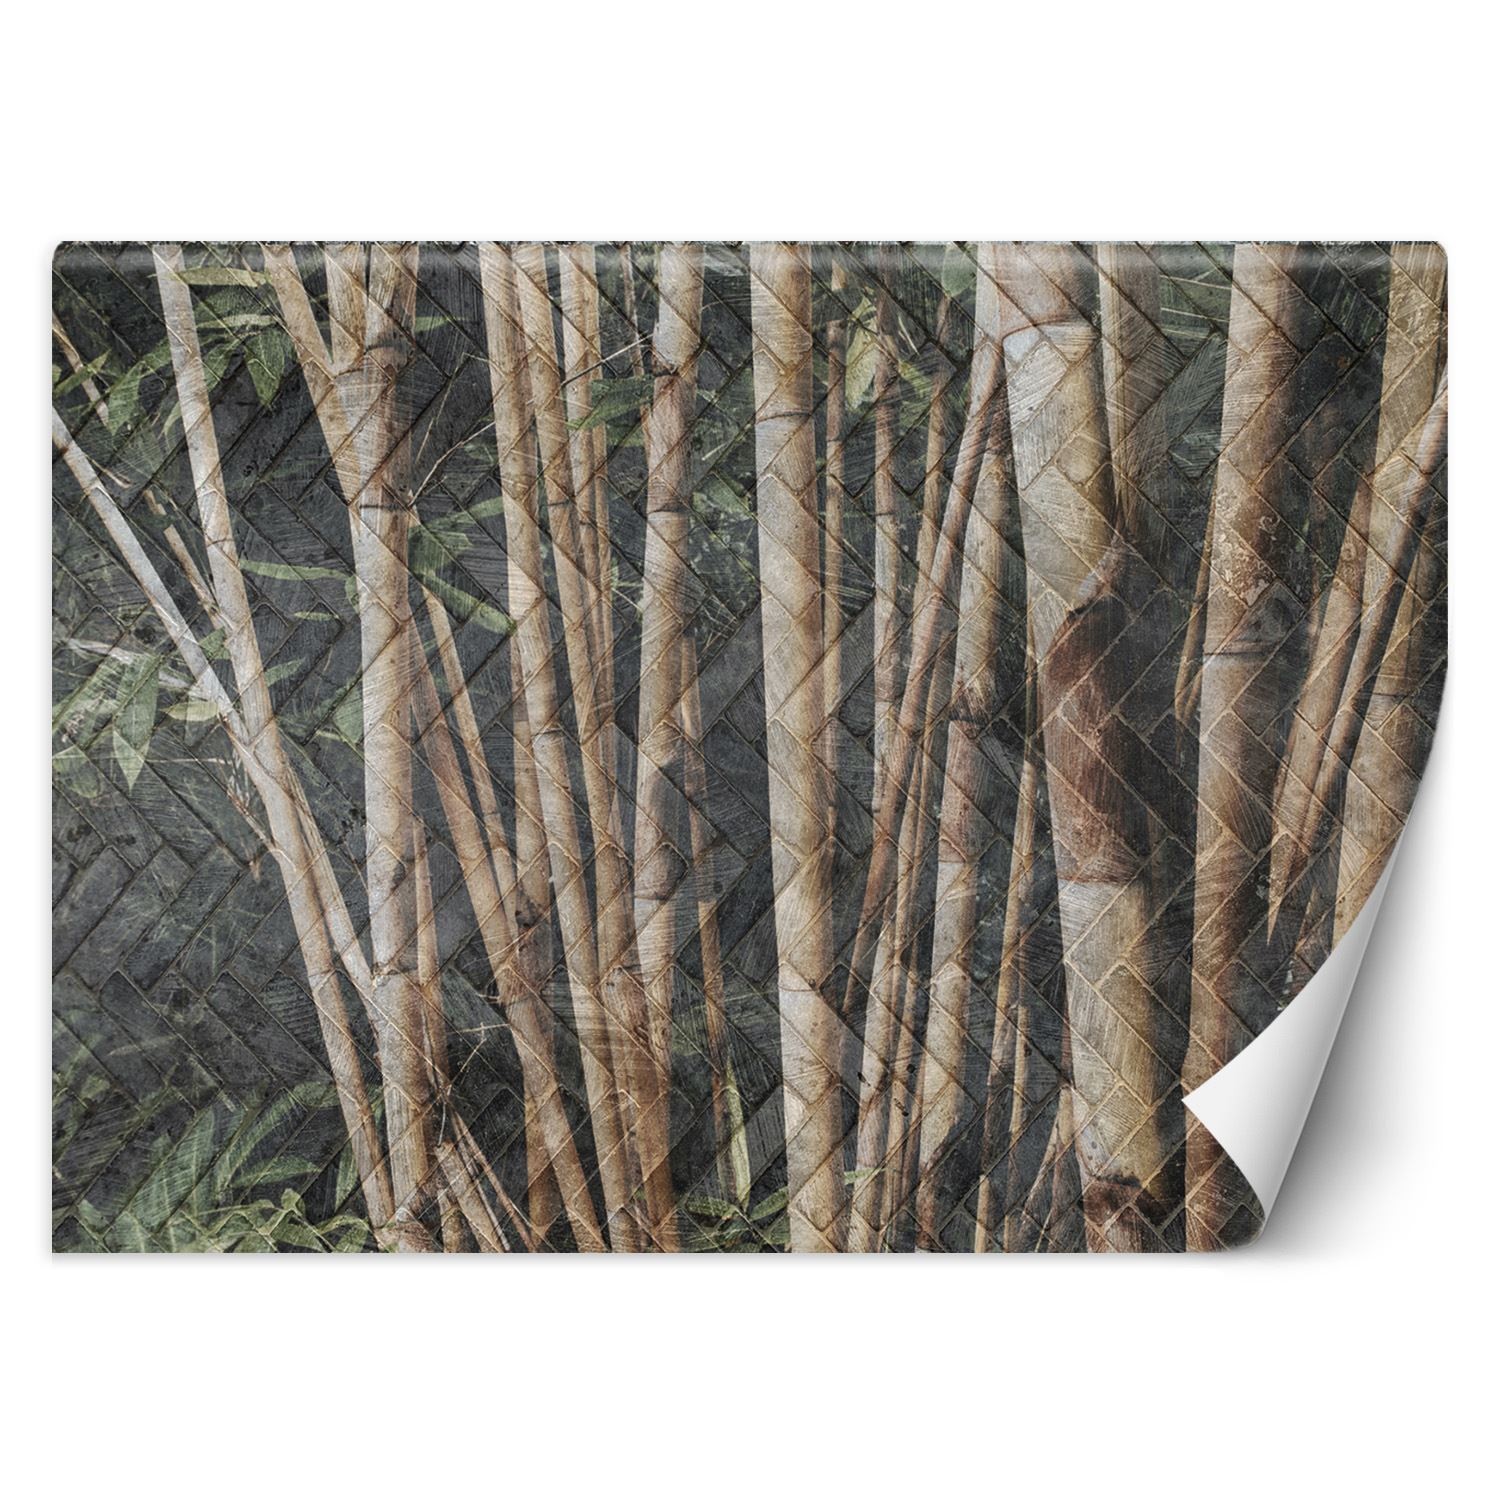 Trend24 – Behang – Bamboo Forest – Vliesbehang – Behang Woonkamer – Fotobehang – 450x315x2 cm – Incl. behanglijm